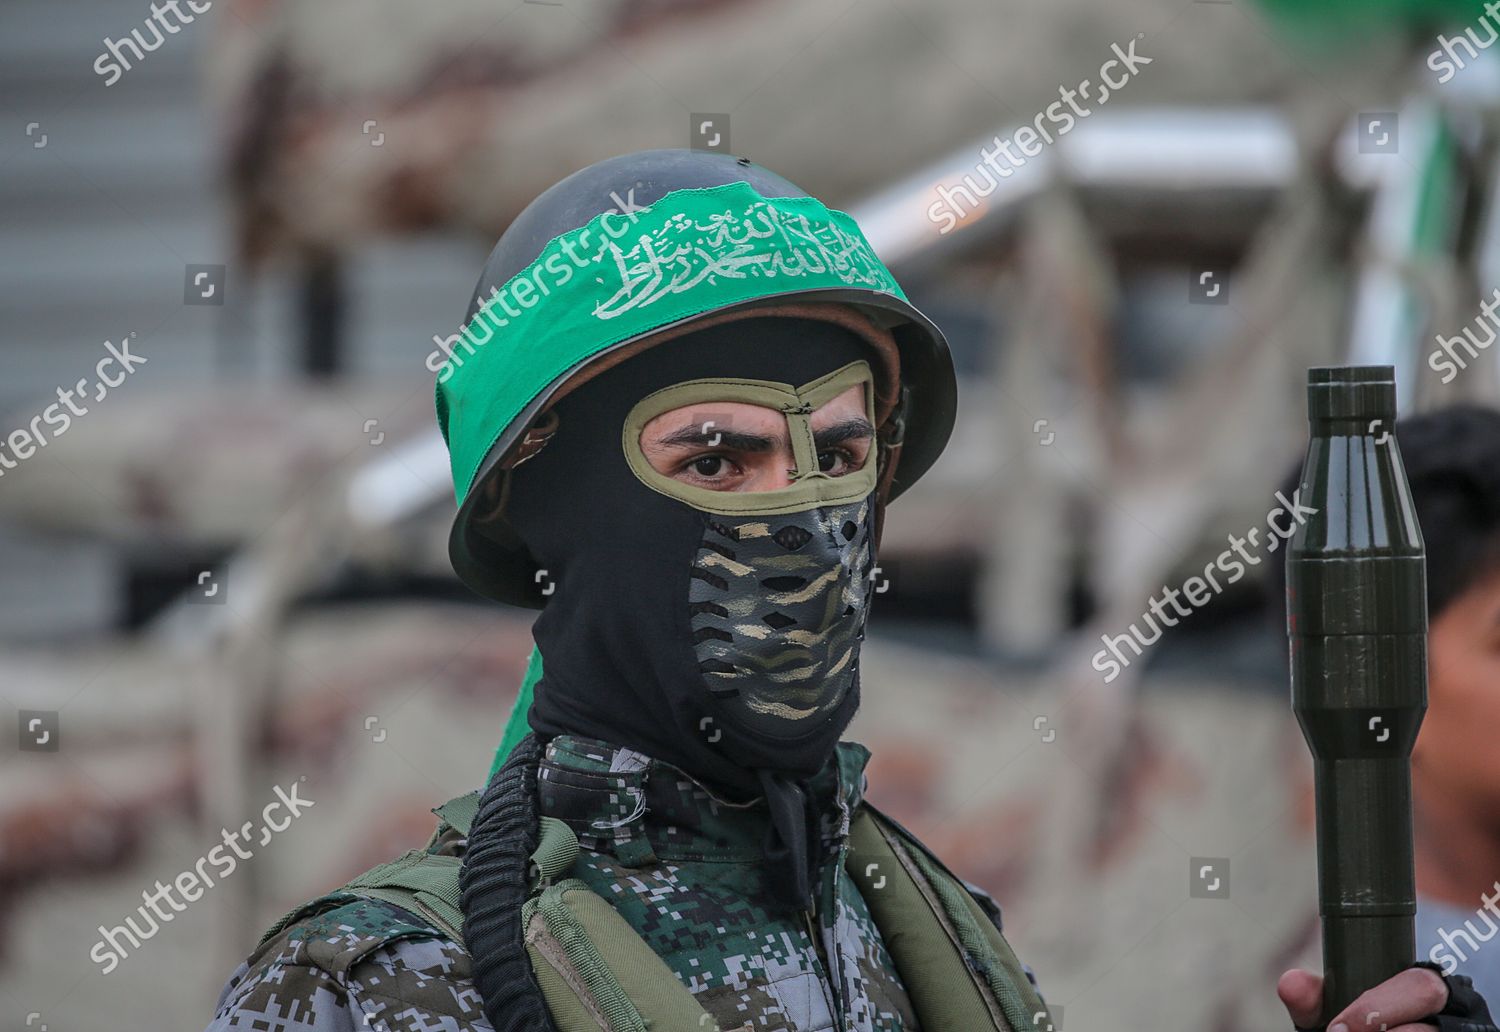 Qassam brigades al [Nasheed] The